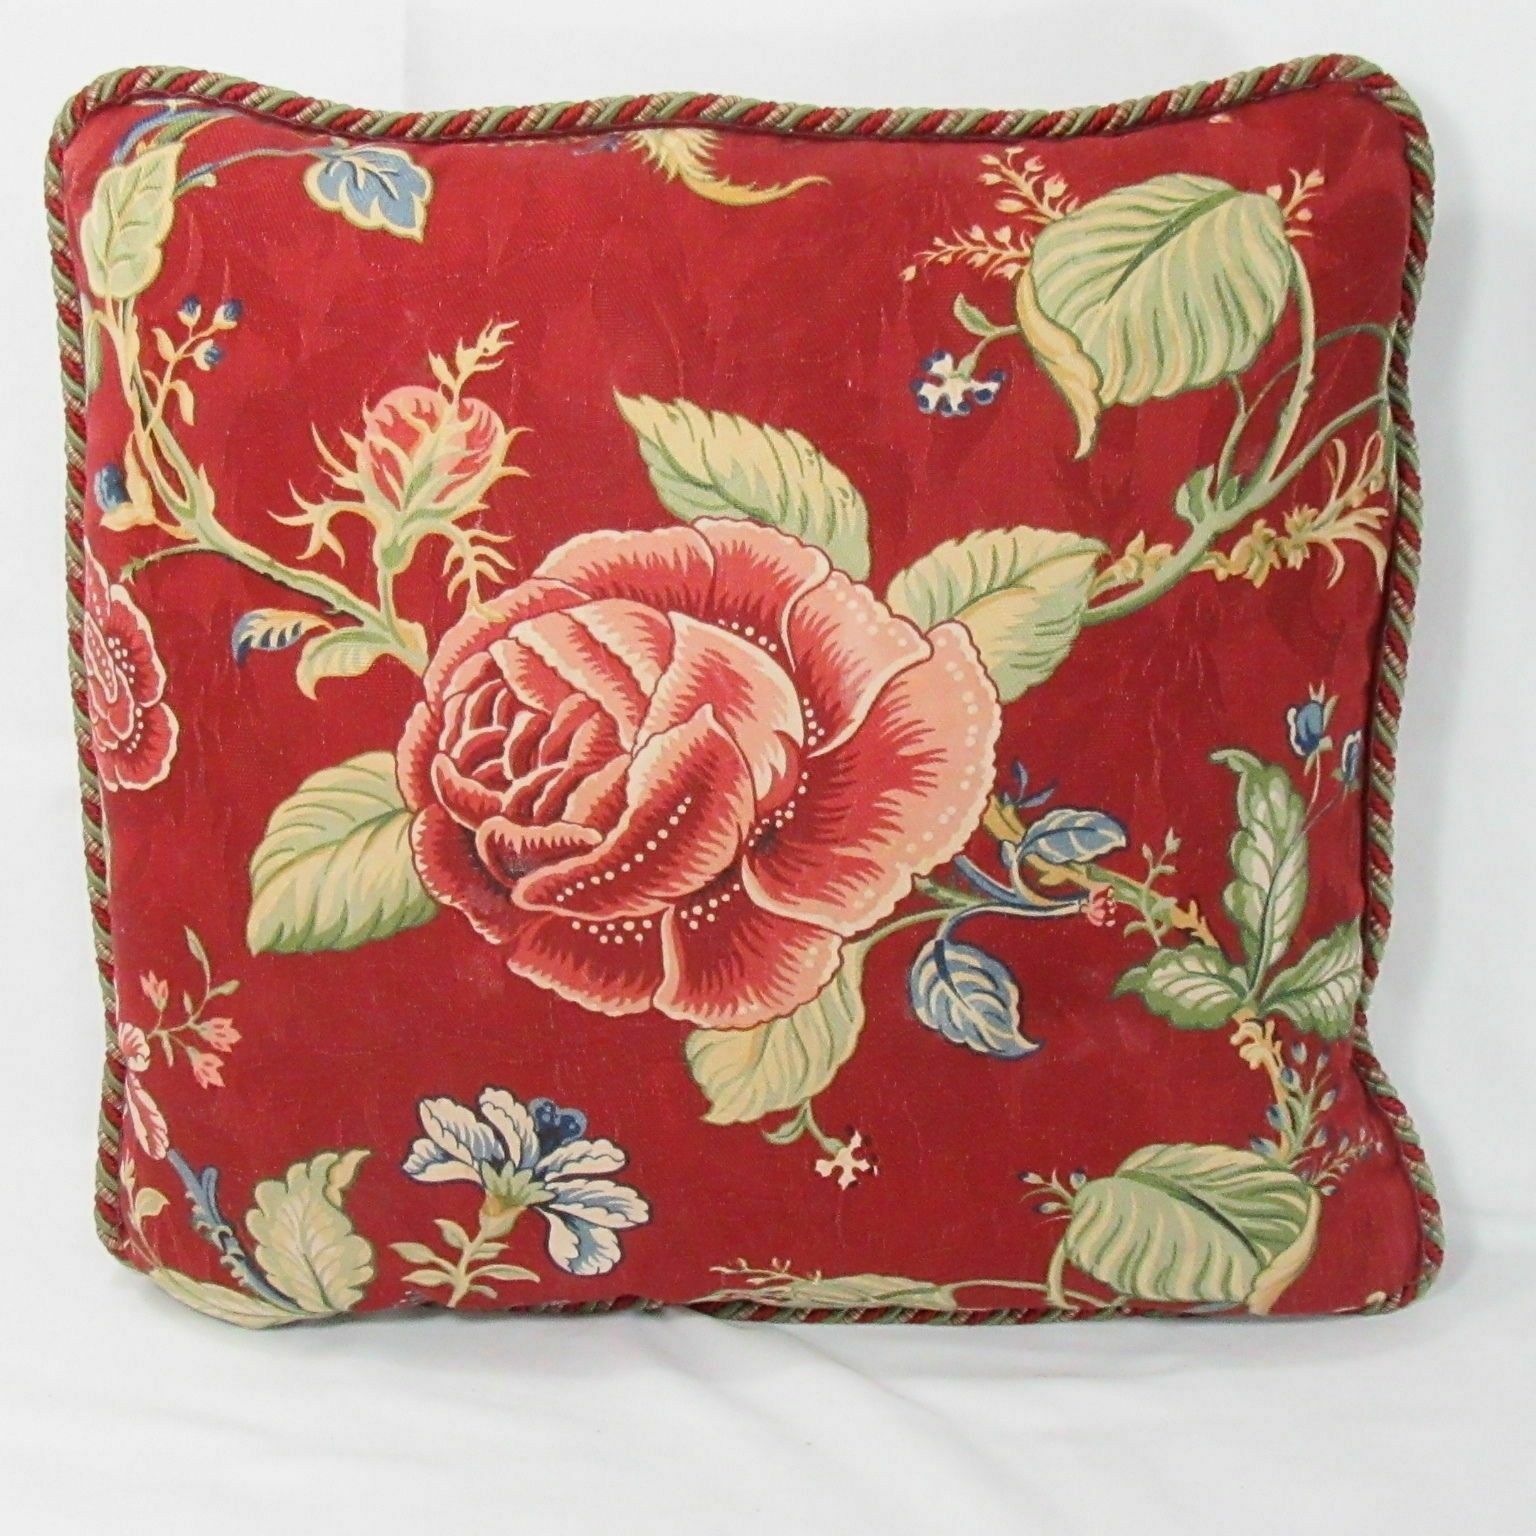 Waverly Montague Floral Crimson Red 16-inch Square Decorative Pillow - $34.00